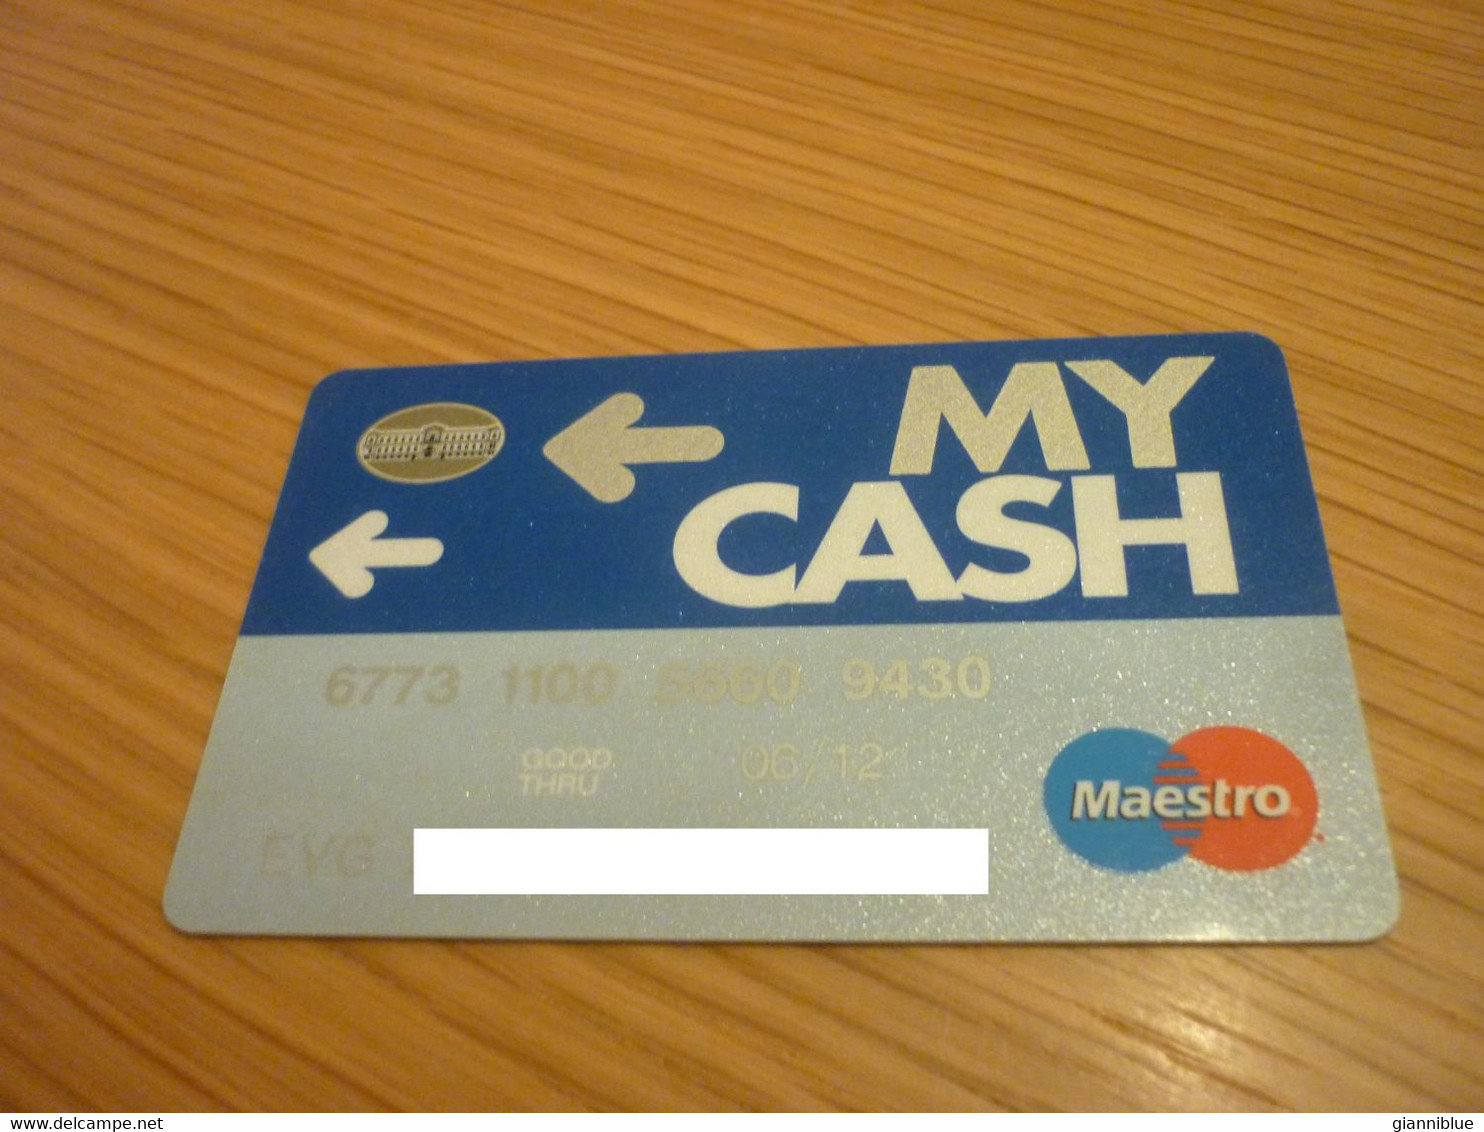 maestro credit card